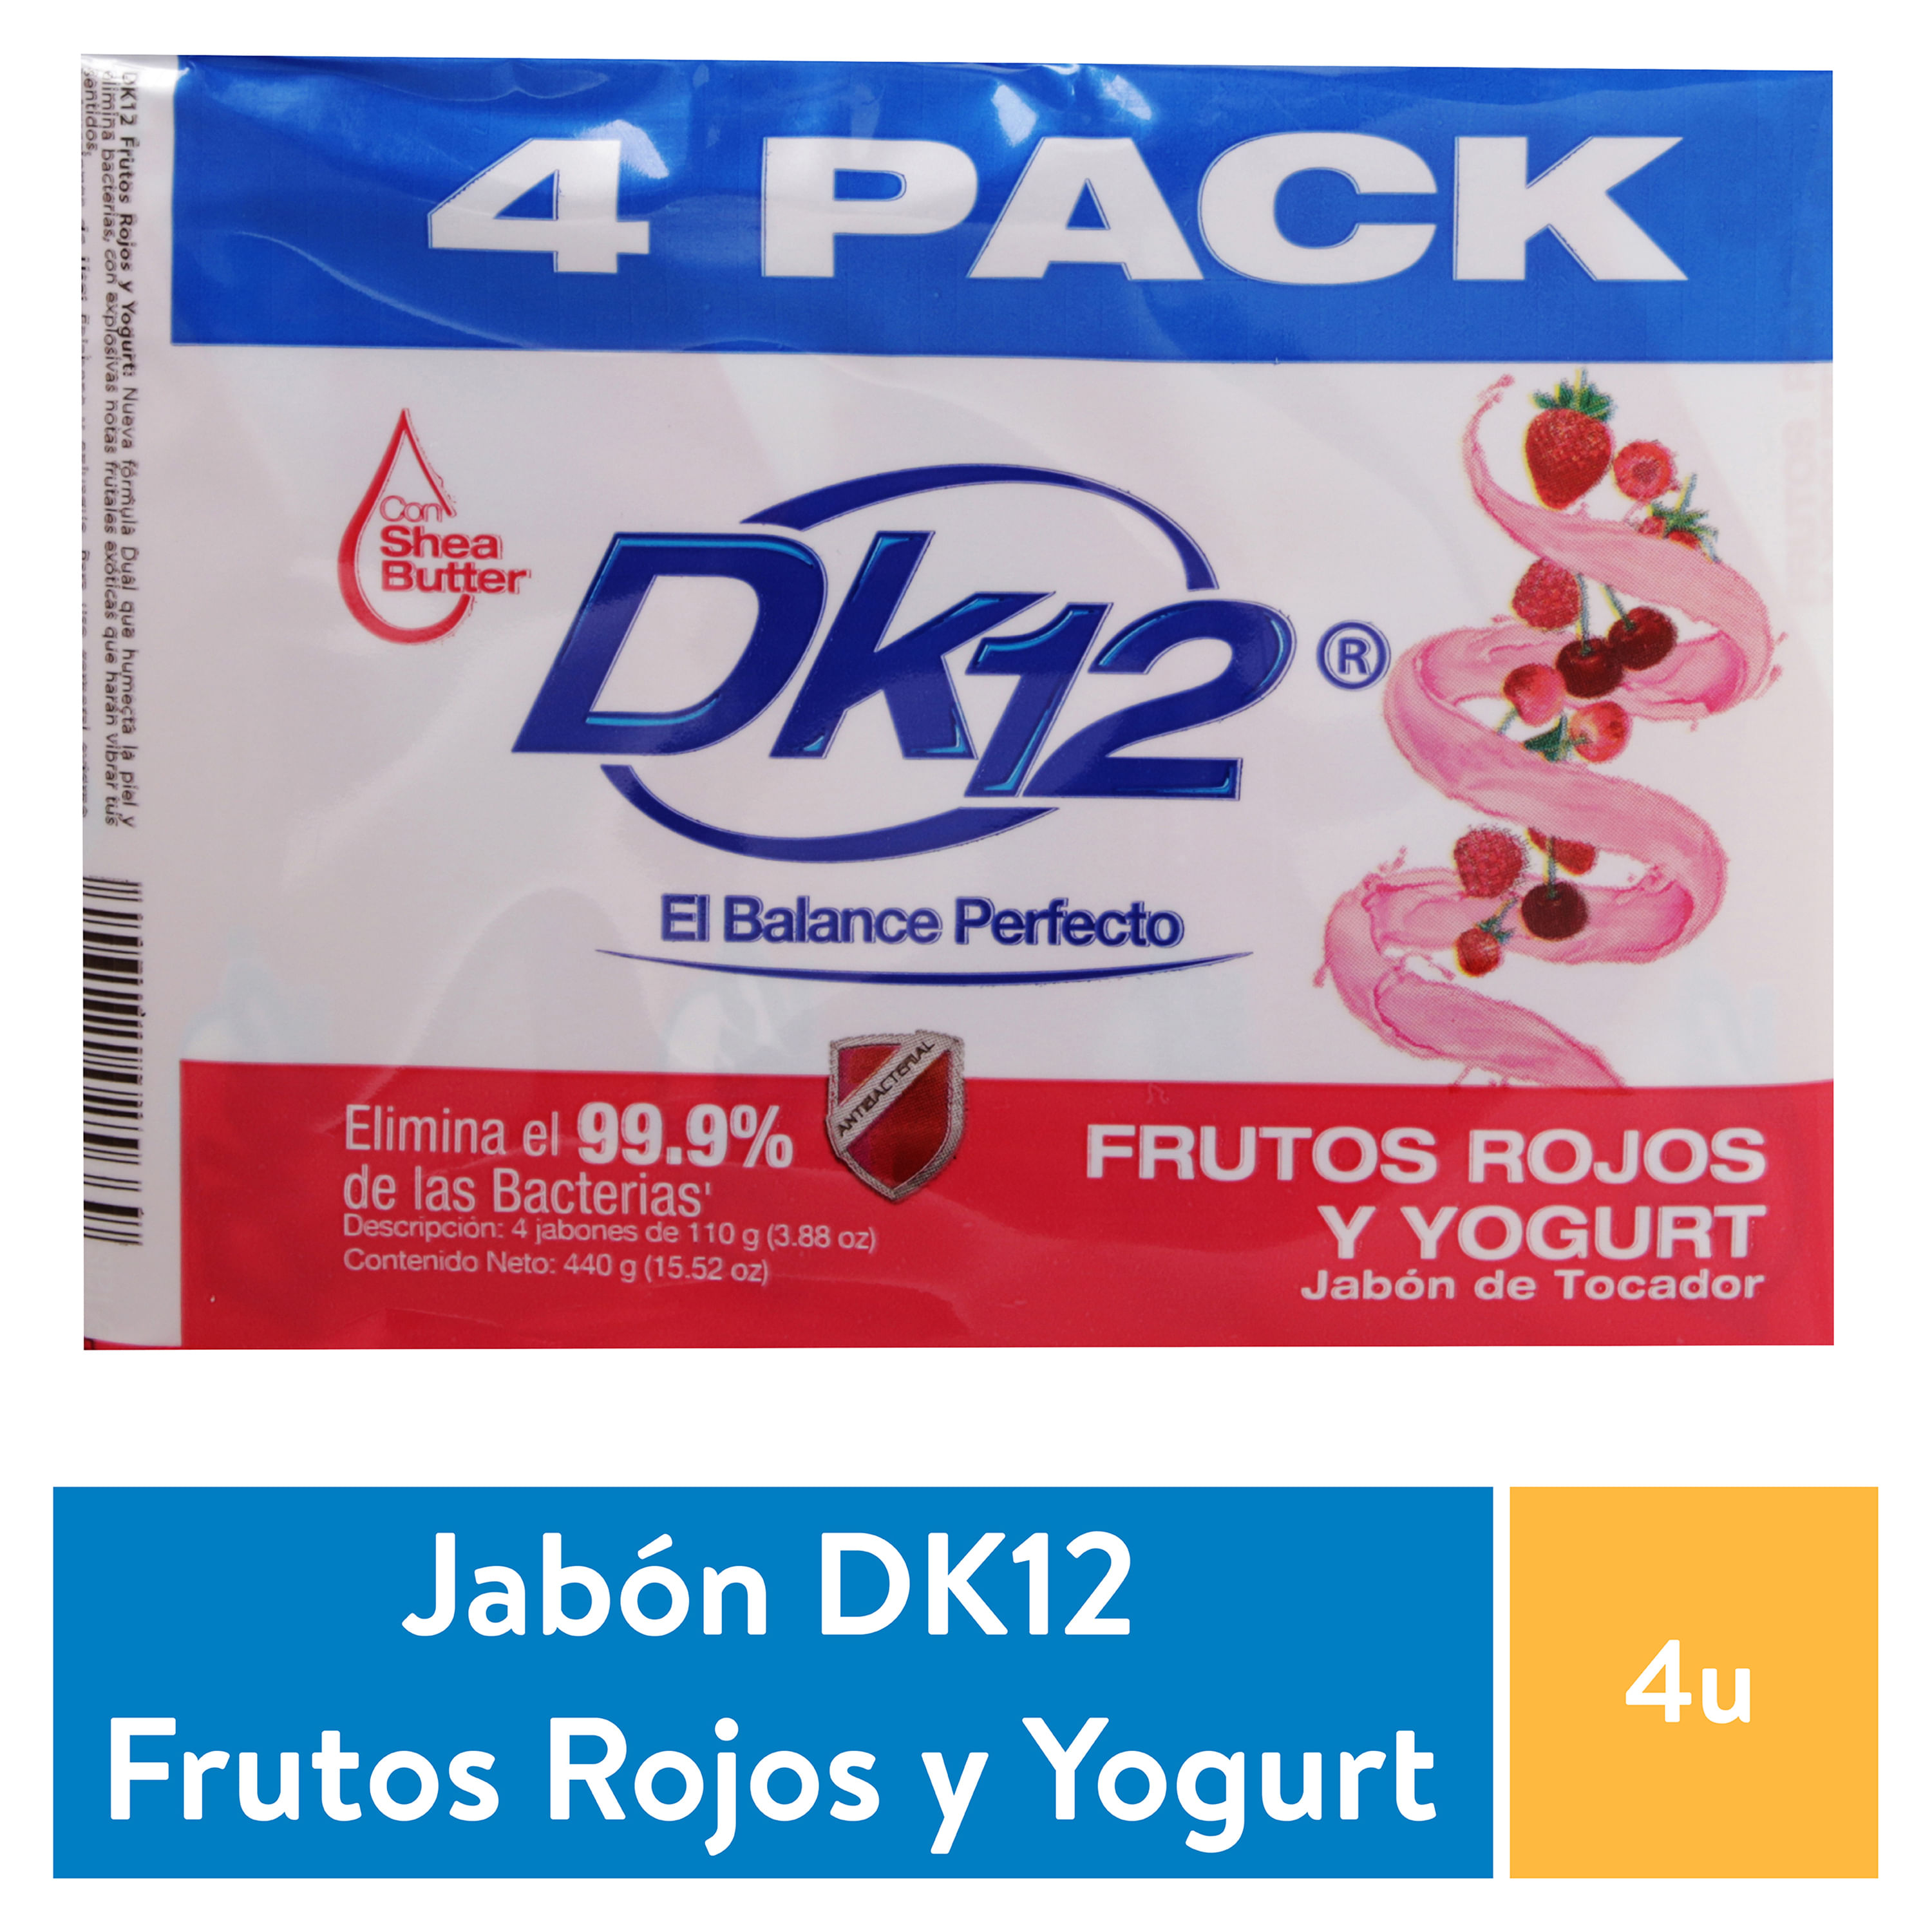 4-Pack-Jabon-Dk12-Frutos-Rojos-440gr-1-32319